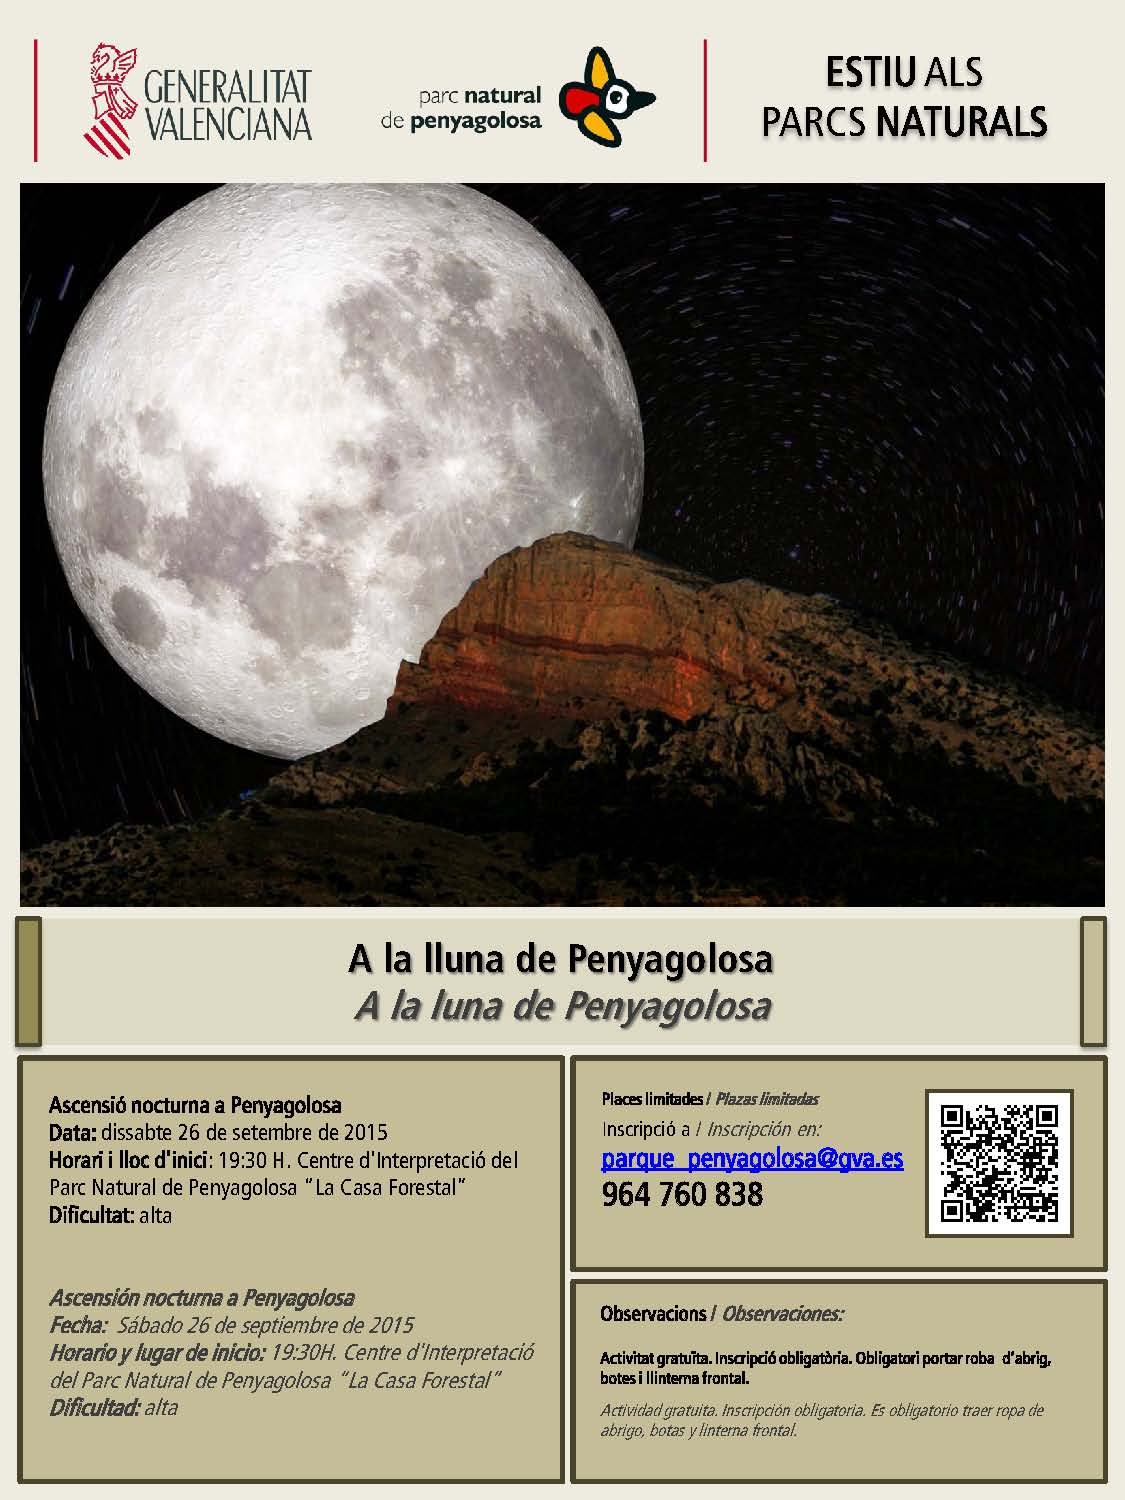 A la luna de Penyagolosa, ascensión nocturna